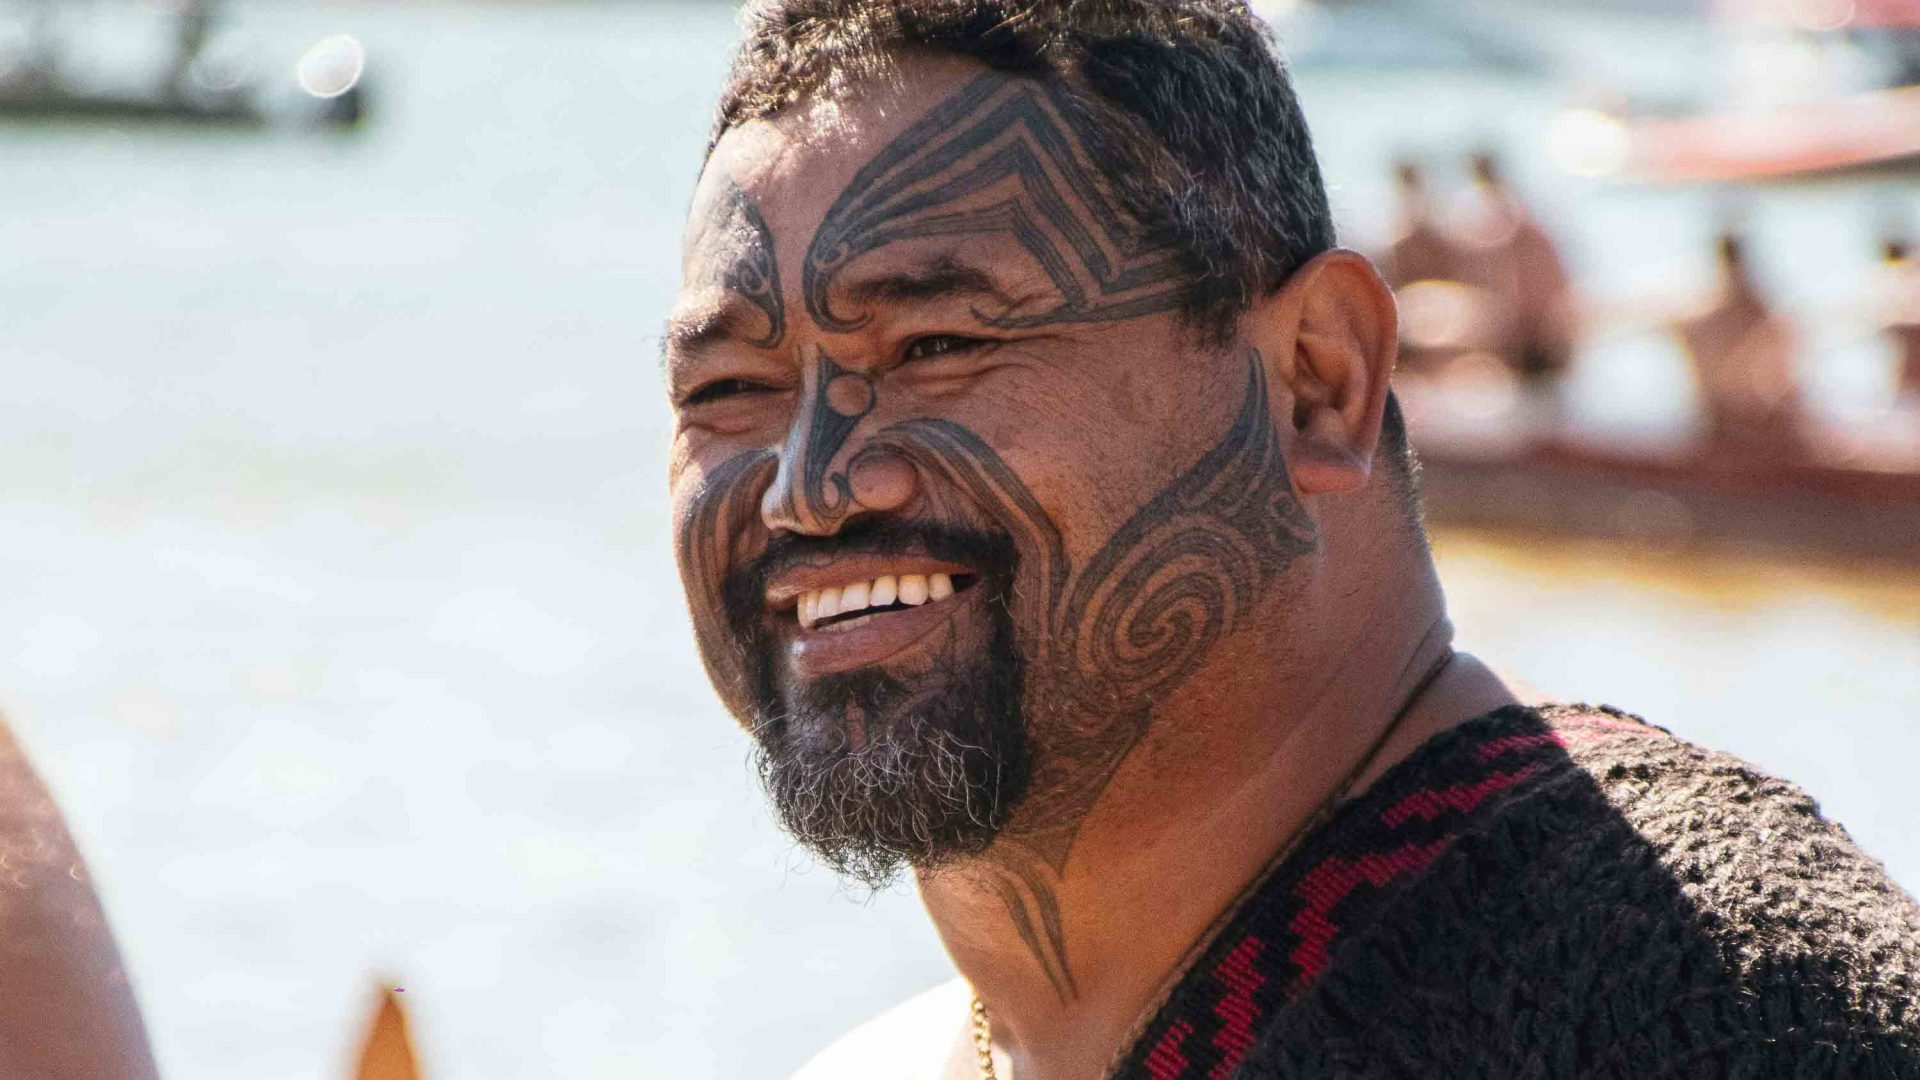 A Maori man with a tattooed face.